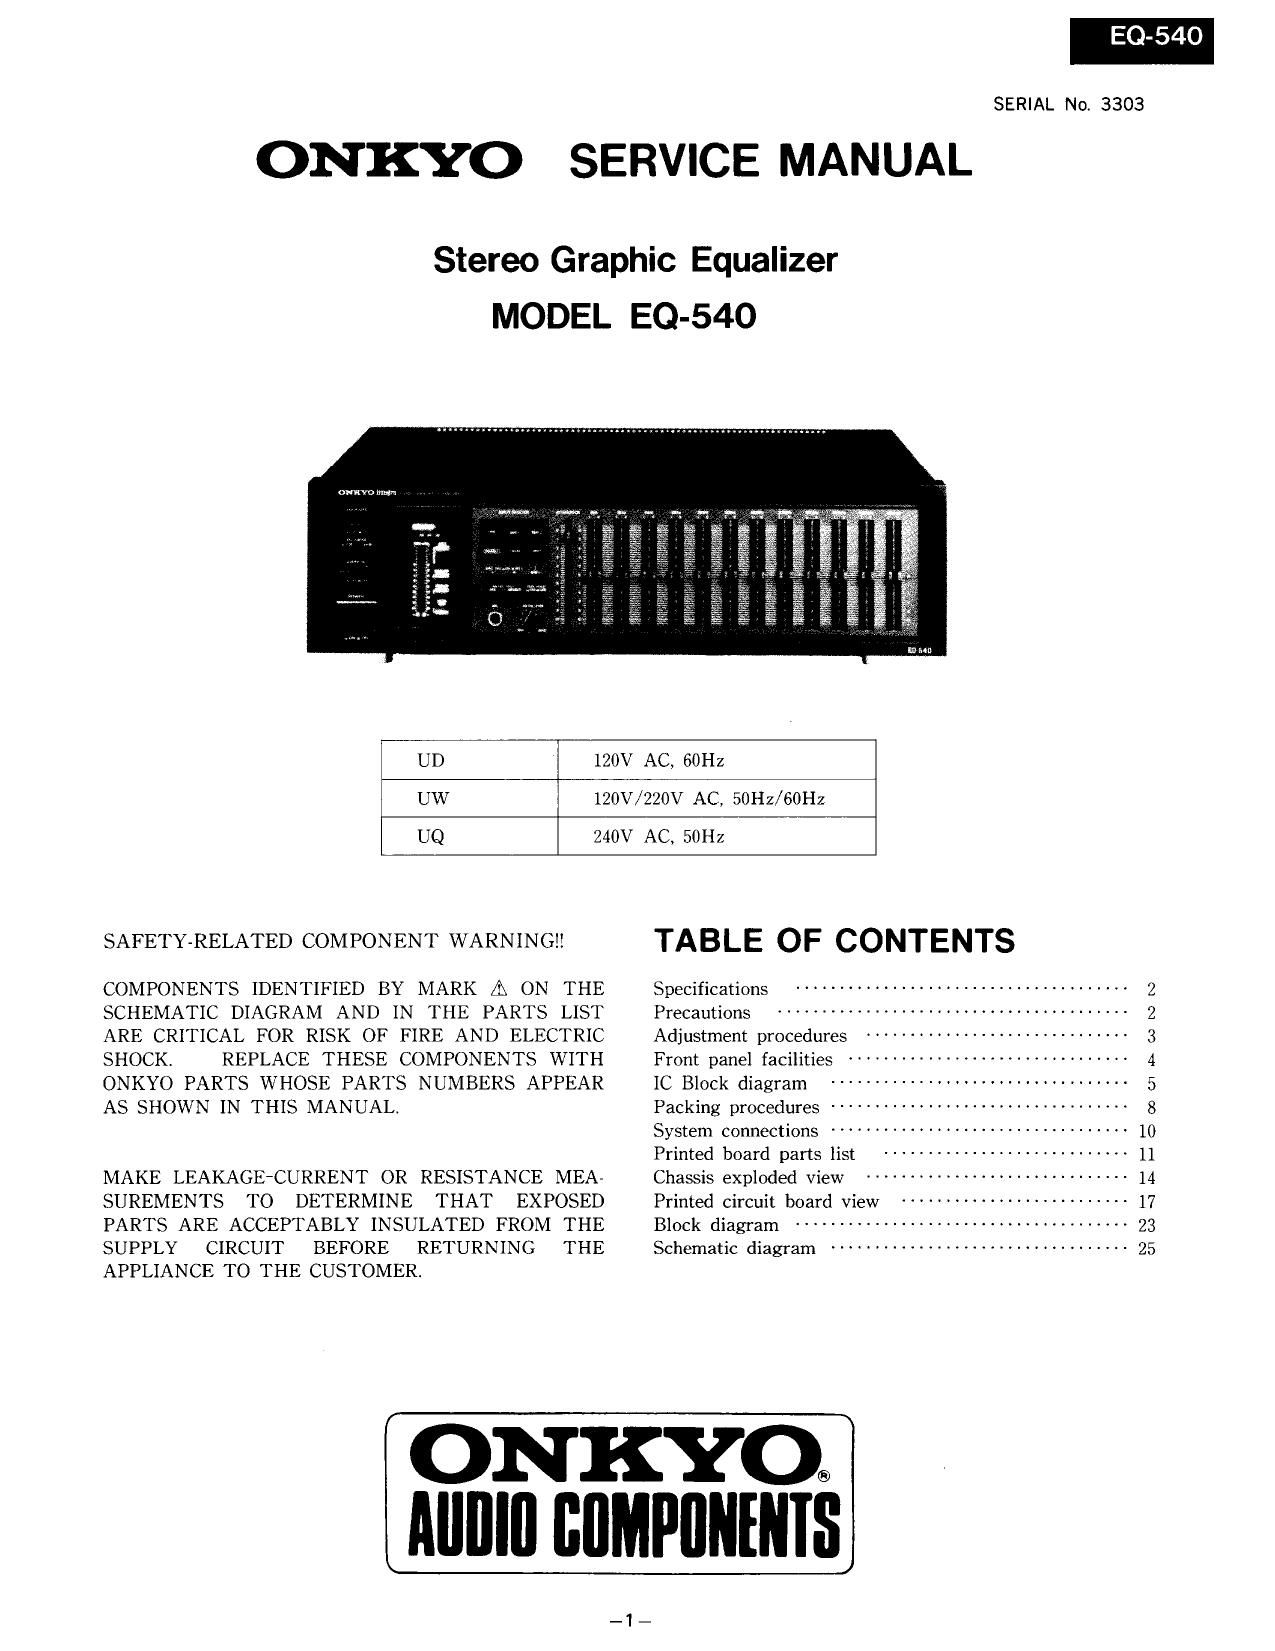 Onkyo EQ 540 Service Manual